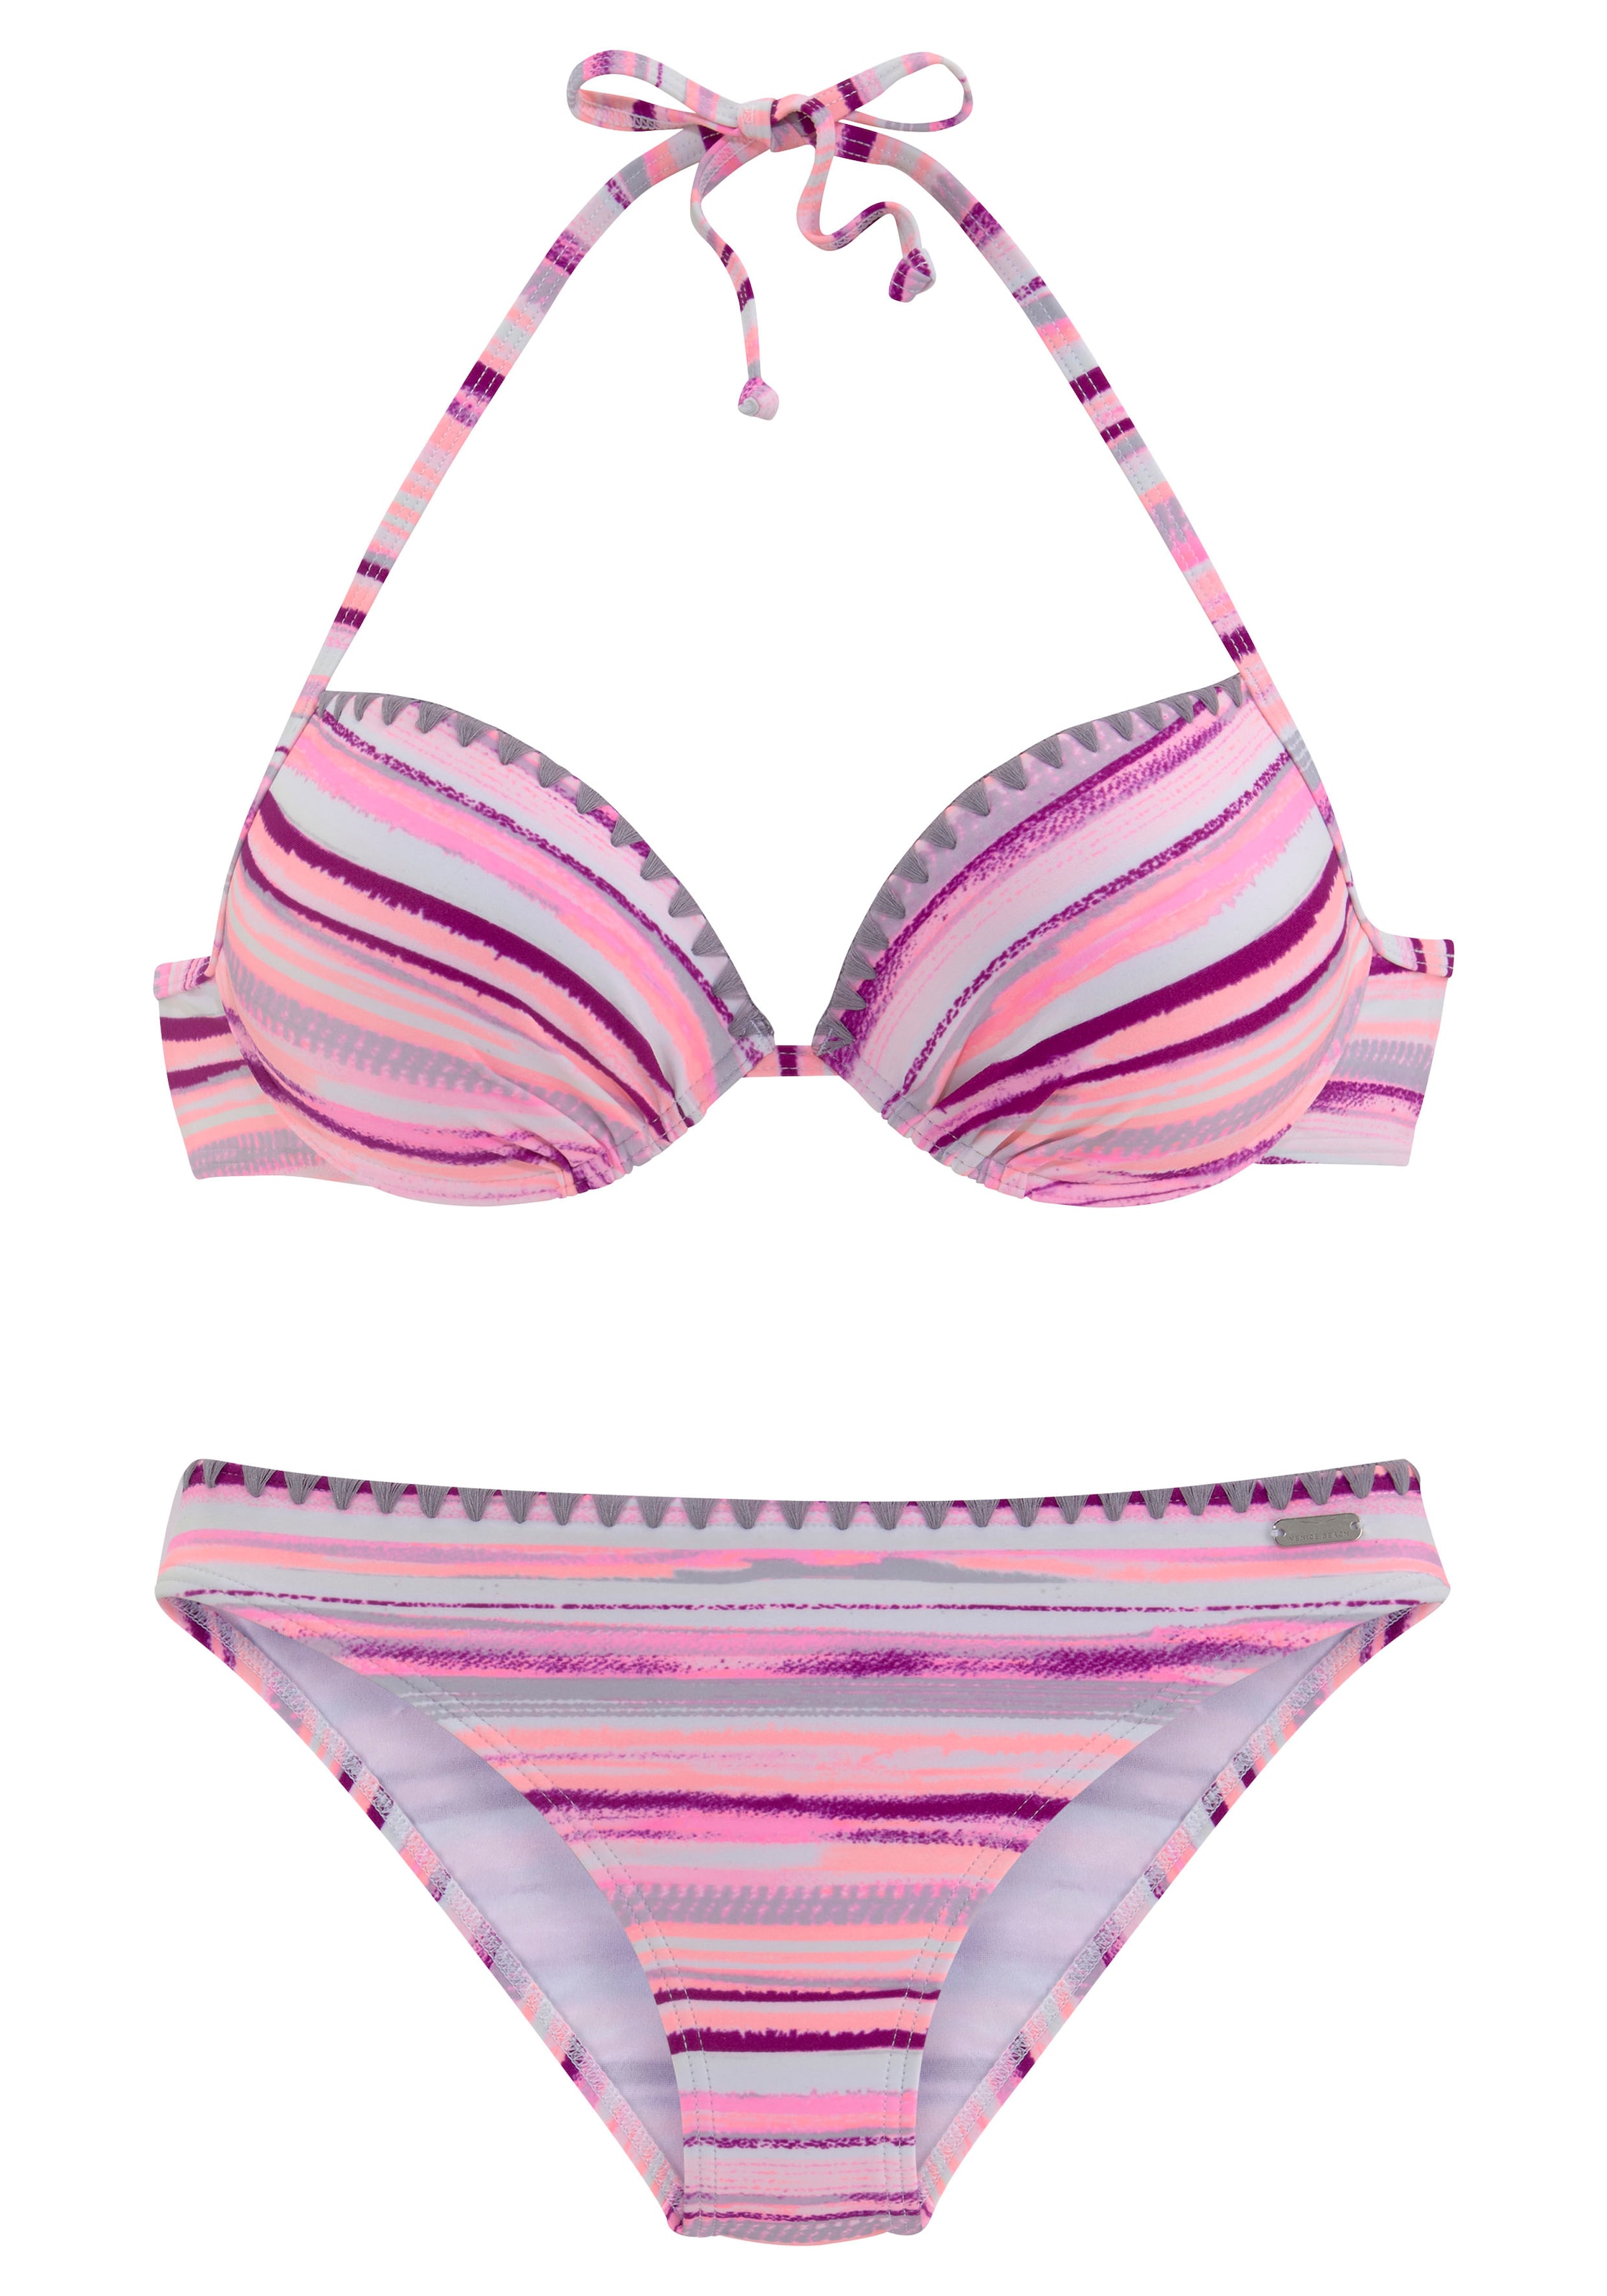 Venice Beach Push-Up-Bikini, mit Häkelkanten am Cup und an der Hose